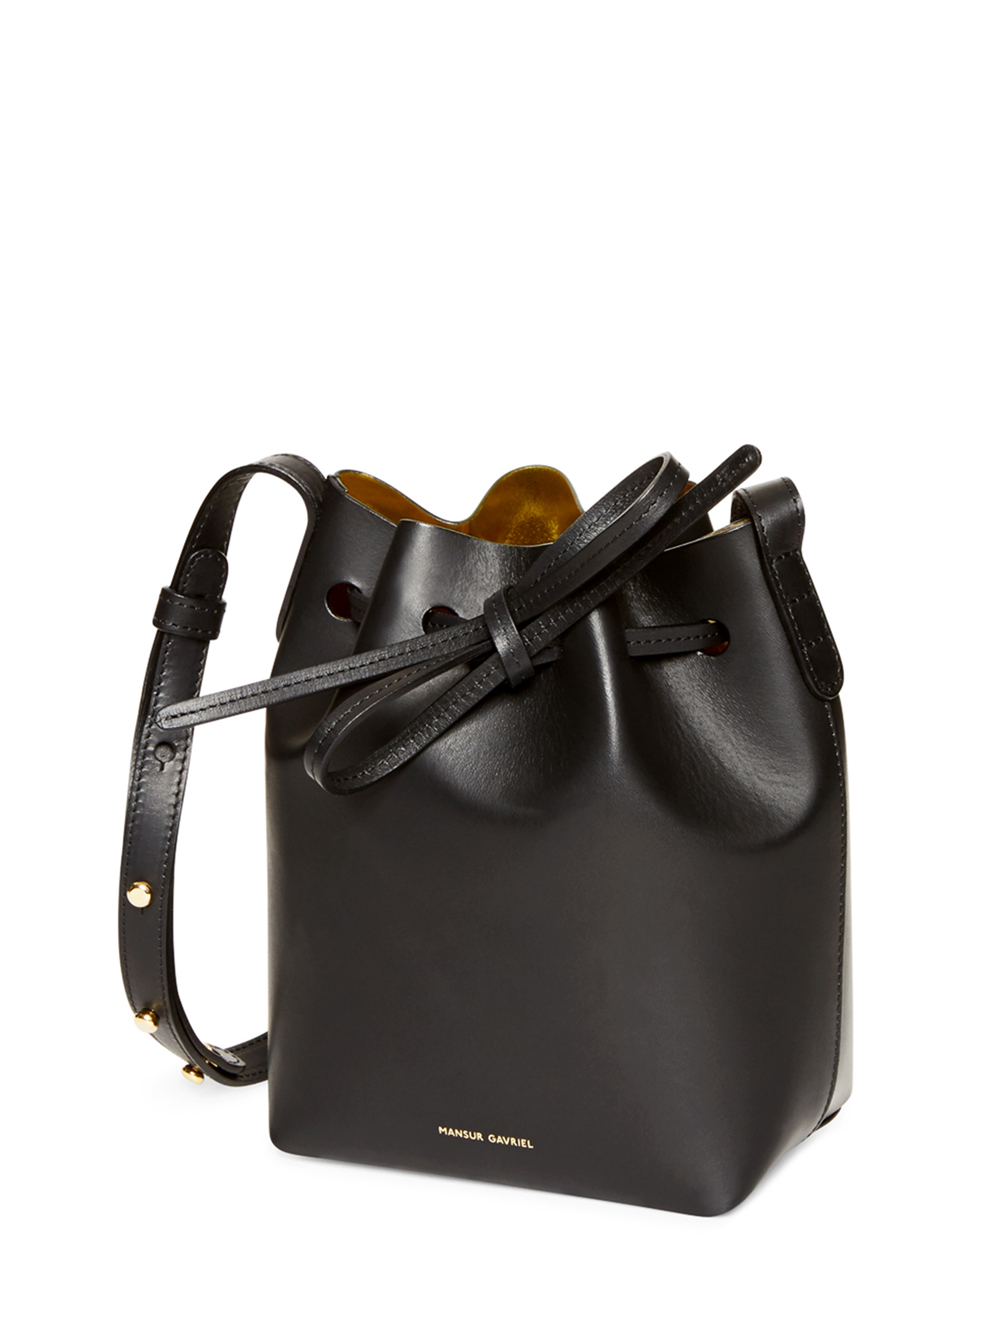 Mansur Gavriel Mini Mini Leather Bucket Bag in Black - Lyst